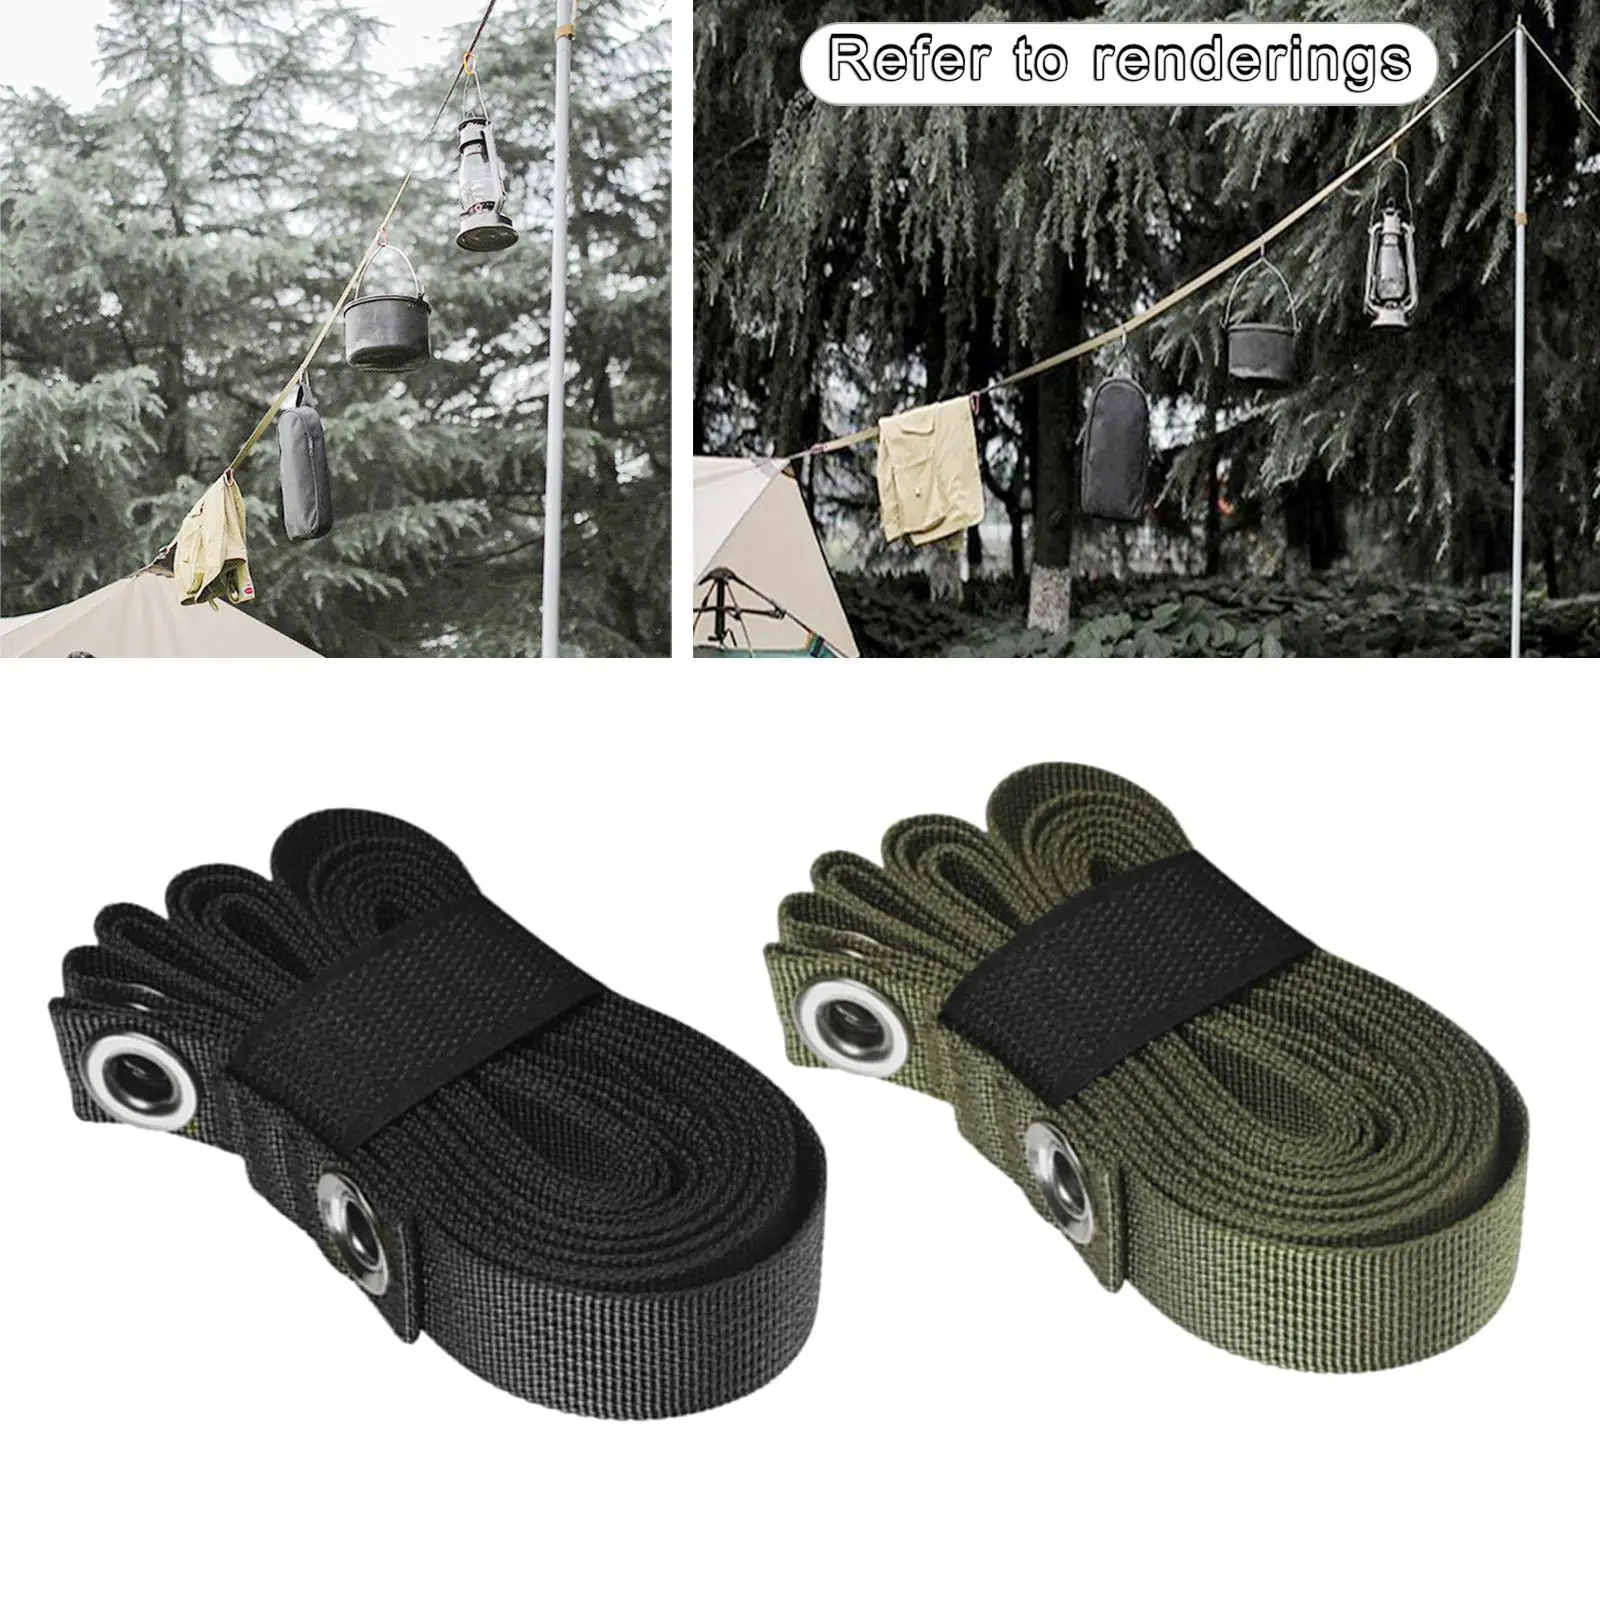 Camping Lanyard Organizer Camping Accessories Hanging Rope Extension Belt